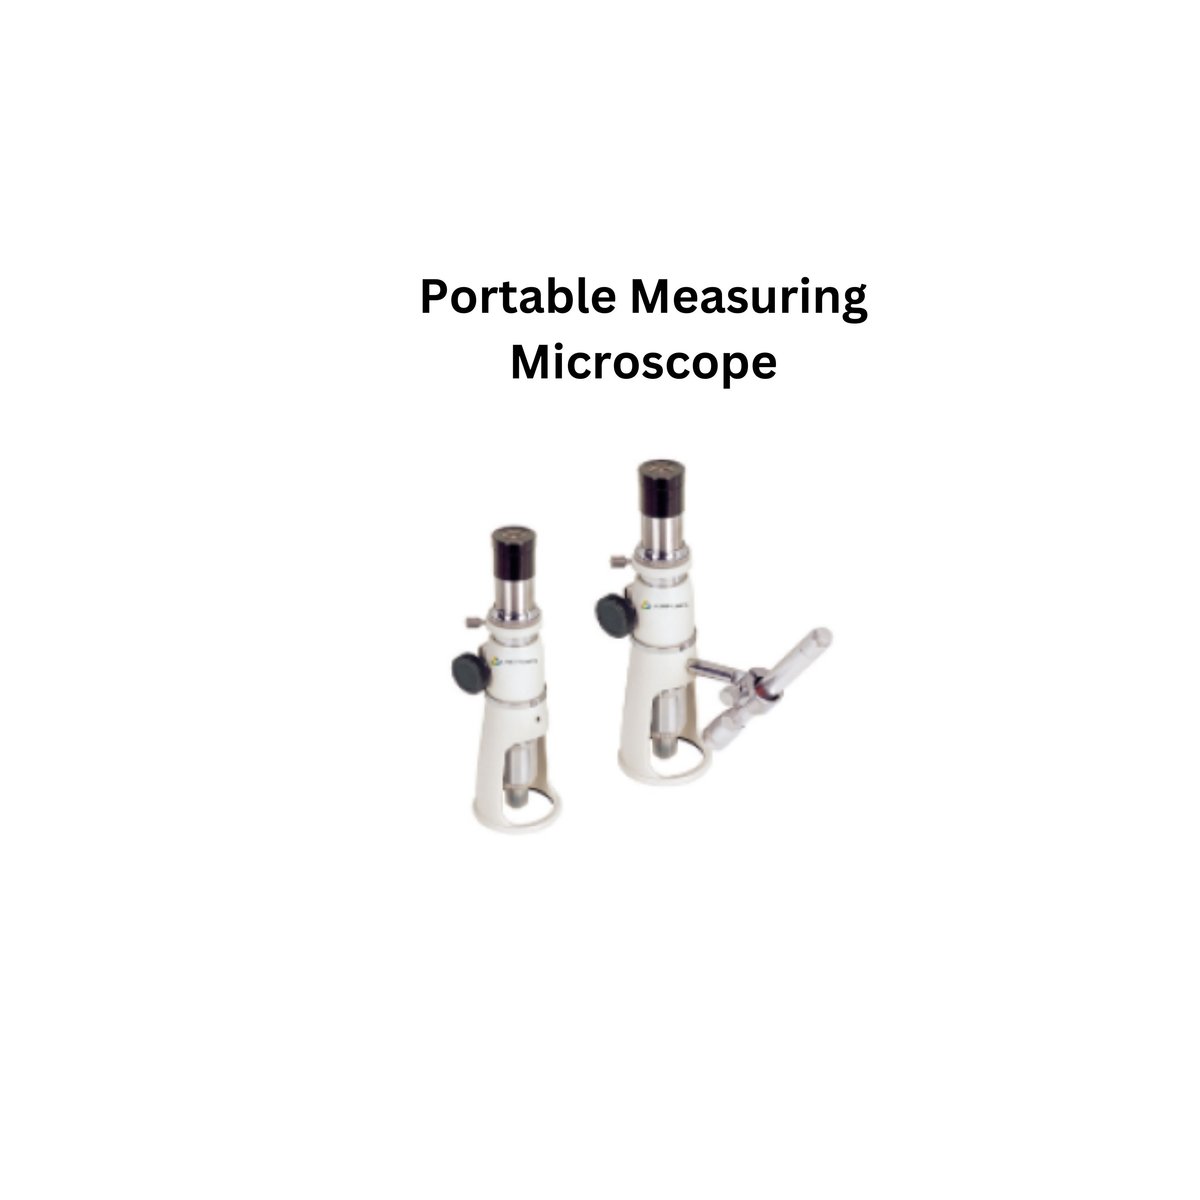 Portable Measuring Microscope.jpg